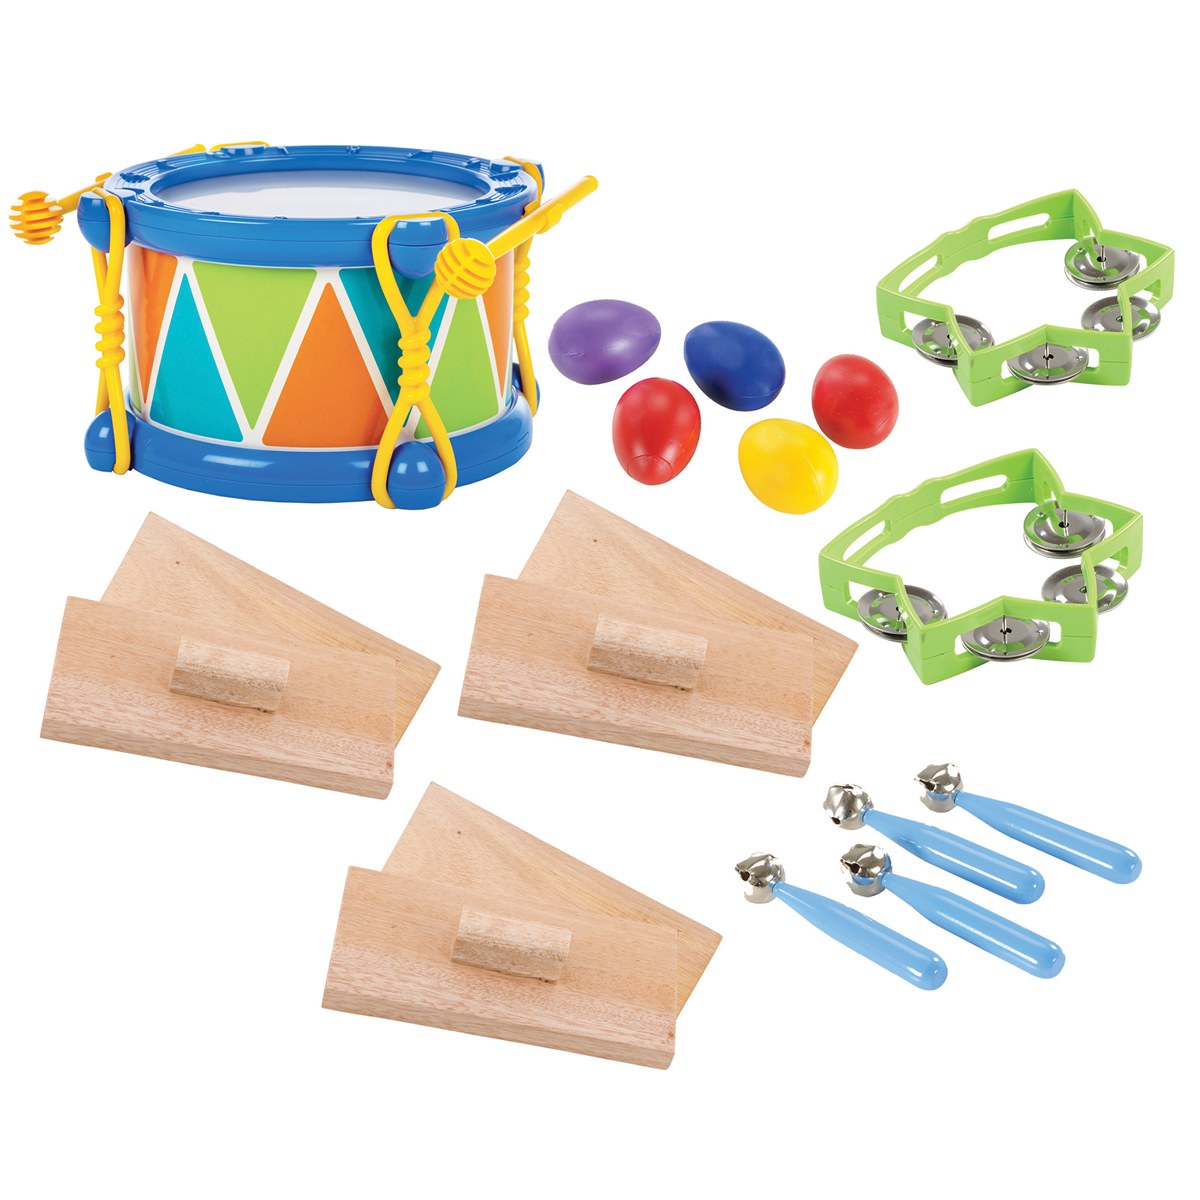 Kaplan Early Learning Company Toddler Rhythm Band - Set of 15